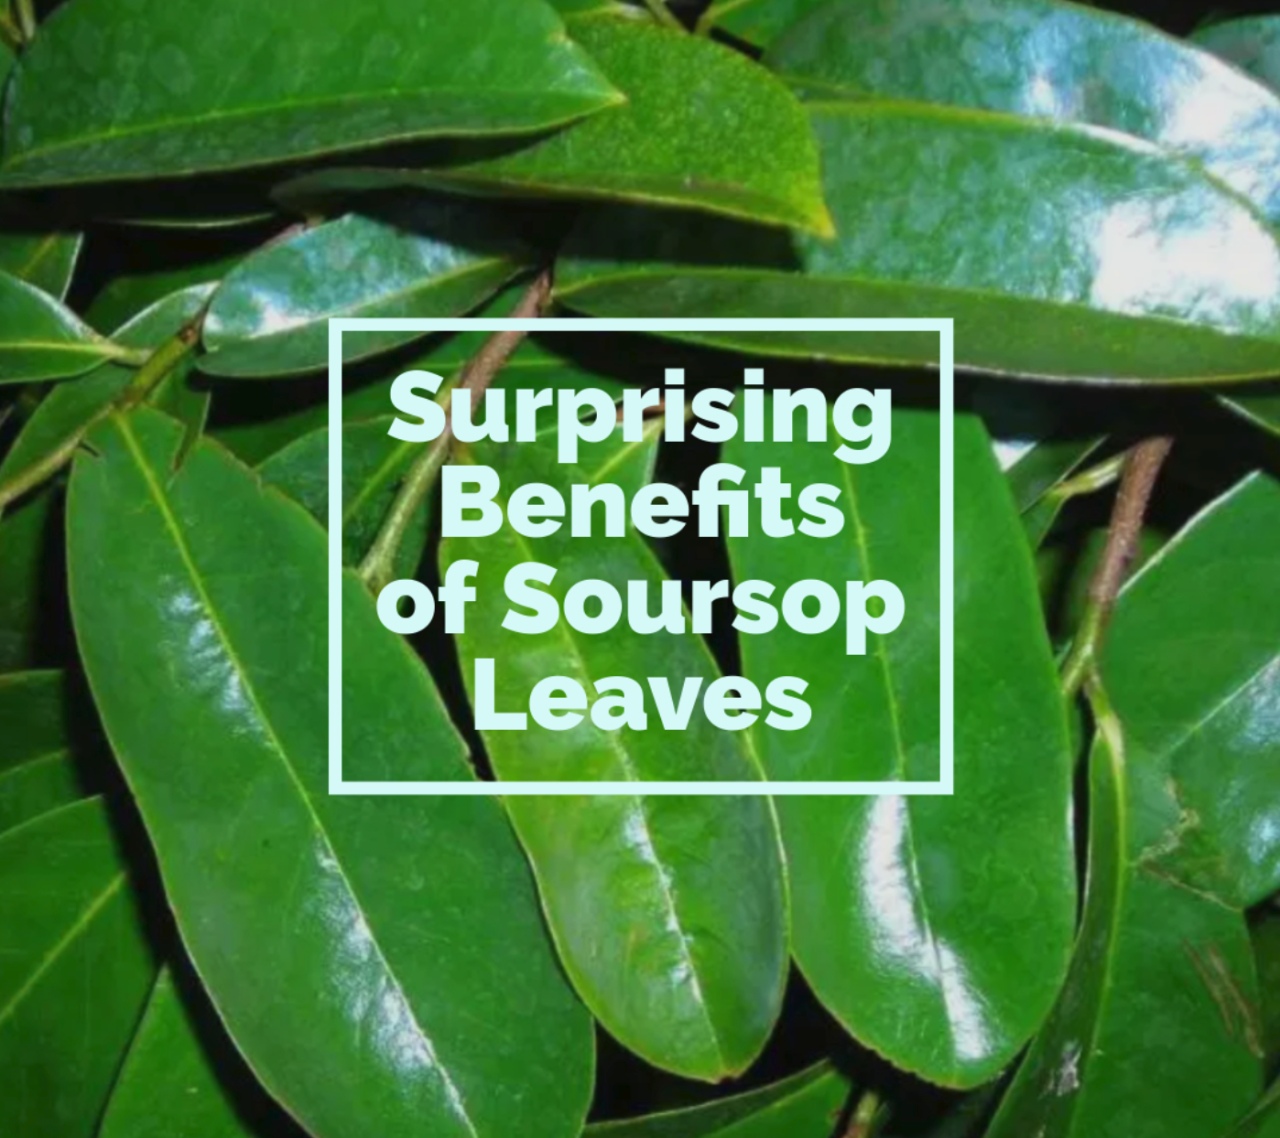 Soursop benefits tea leaf health